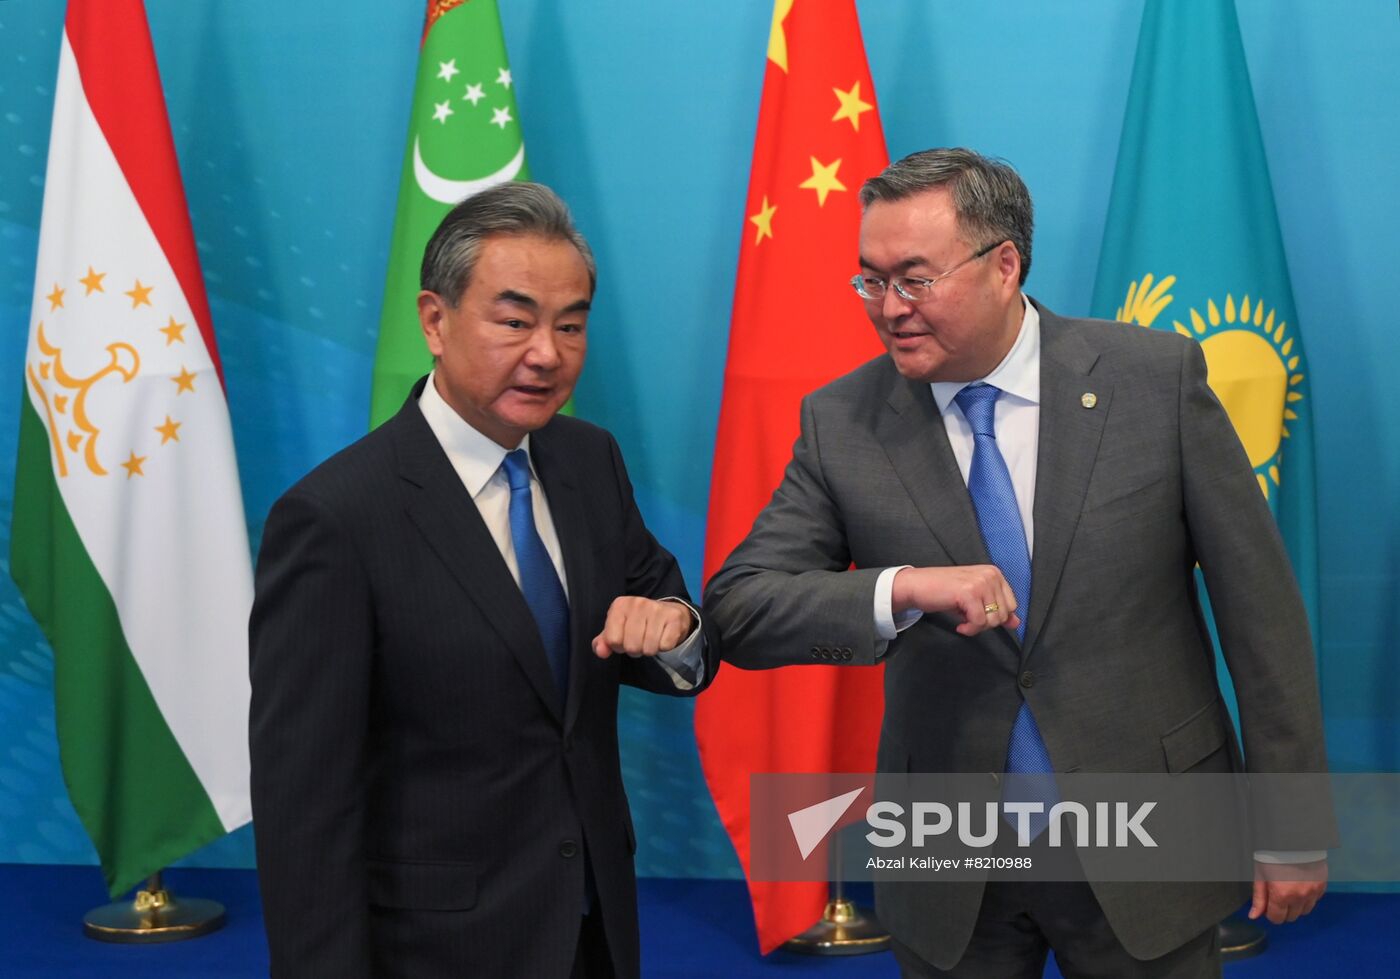 Kazahstan Central Asia China Meeting